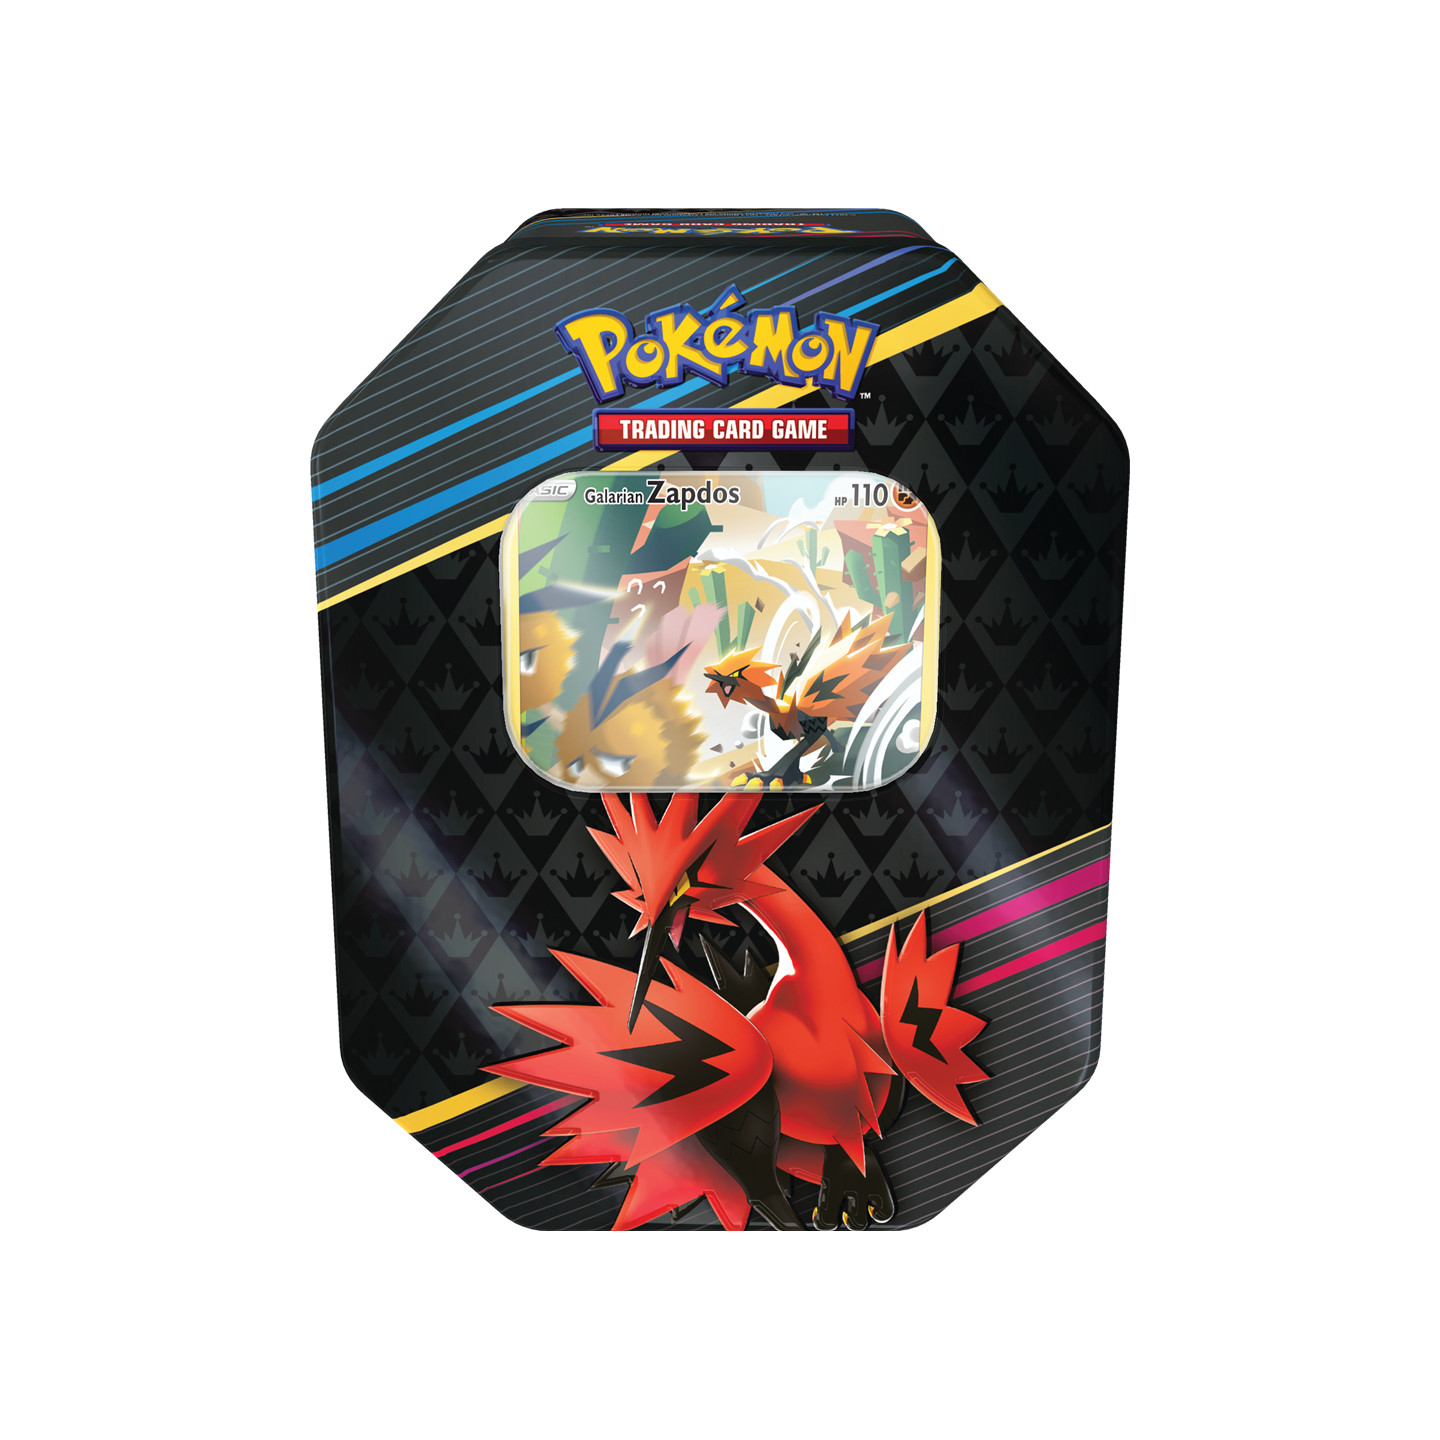 Pokémon - Pokébox Zénith Suprême EB12.5 : Électhor de Galar - DracauGames